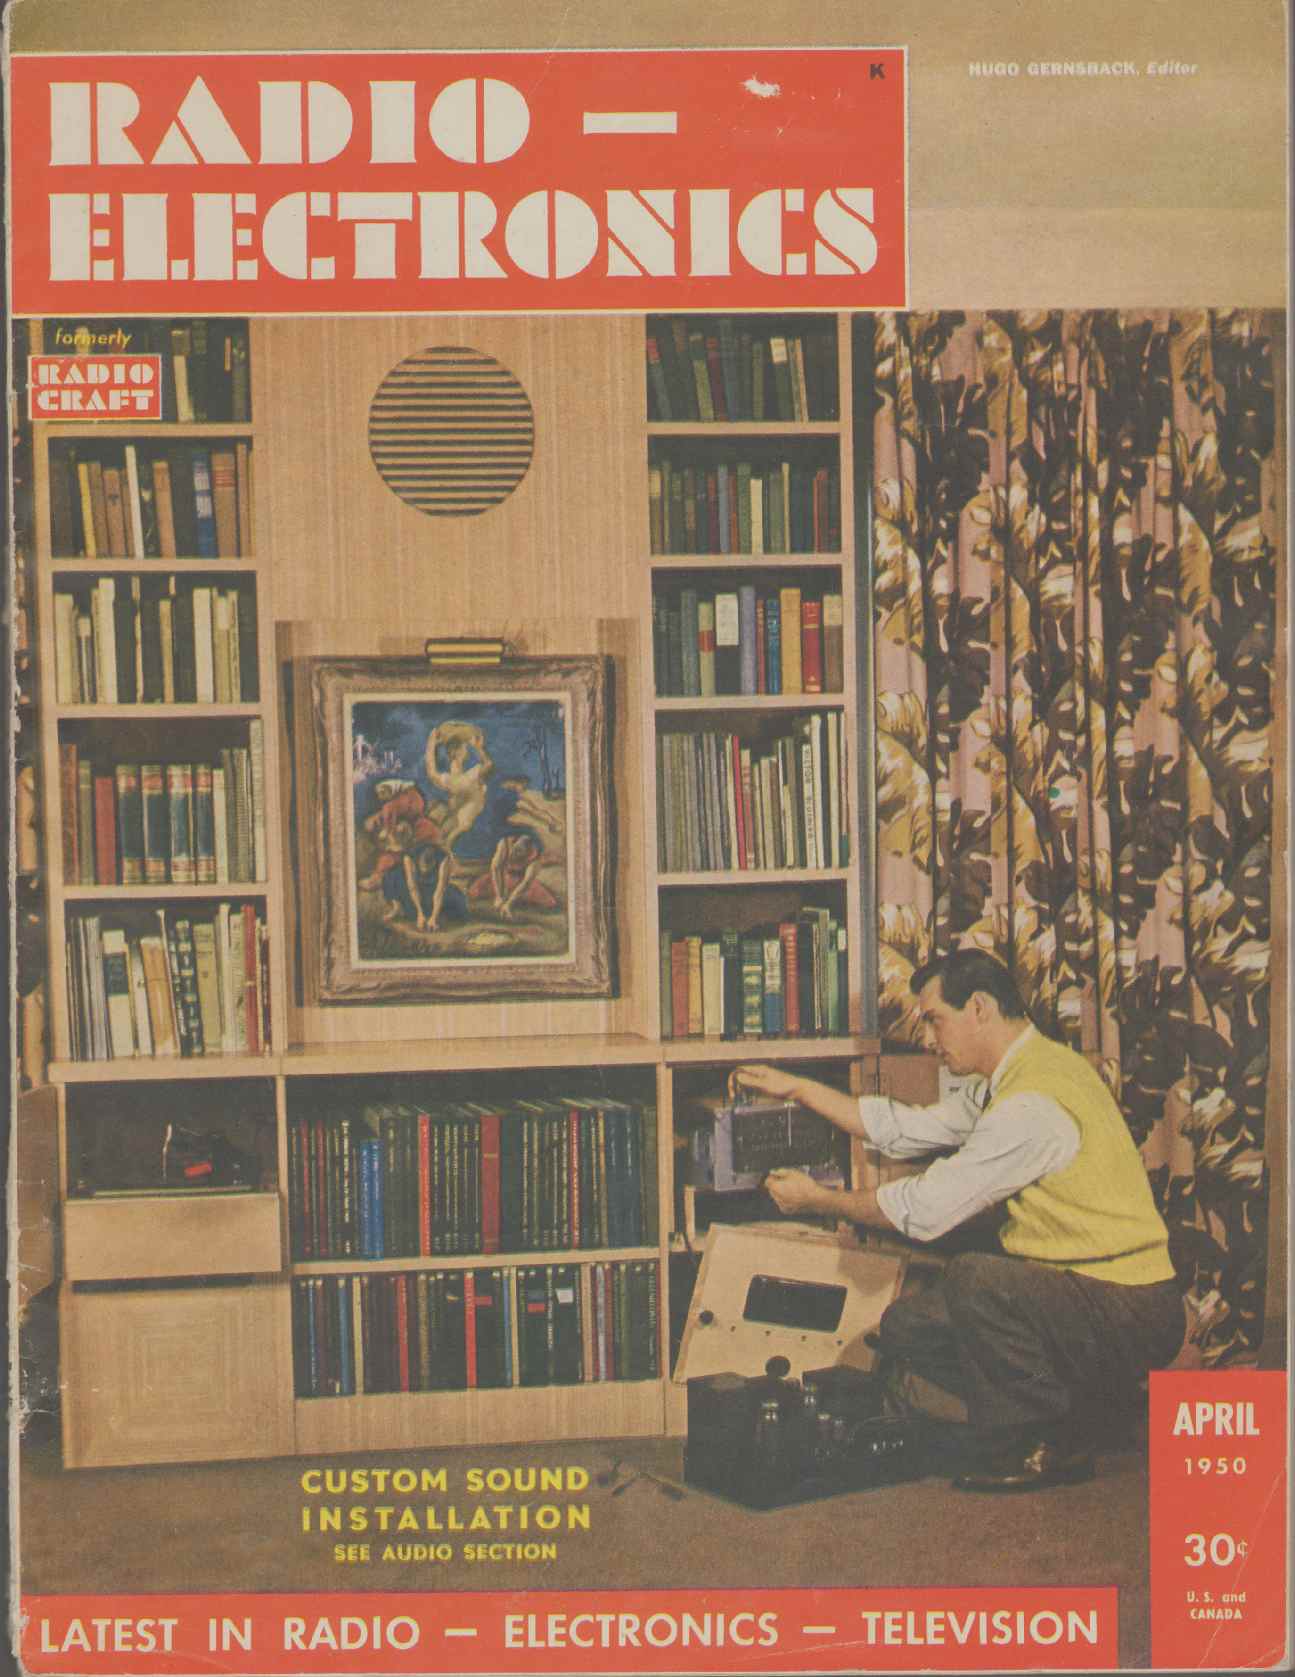 Gernsback, Hugo; editor - RADIO - ELECTRONICS April 1950 Volume XXI, No. 7